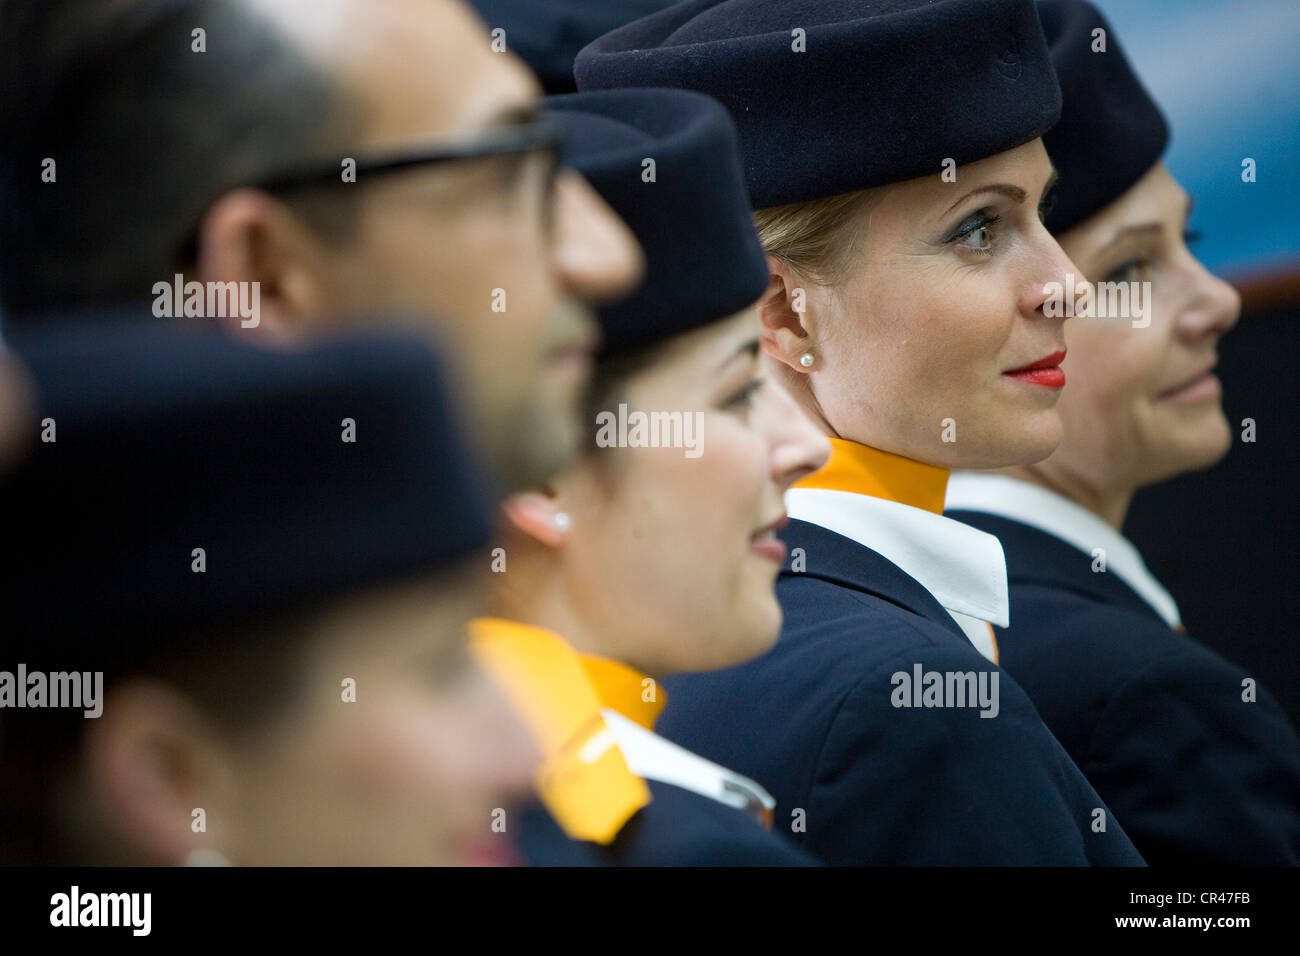 Lufthansa Airlines Flight Attendants. Stockfoto